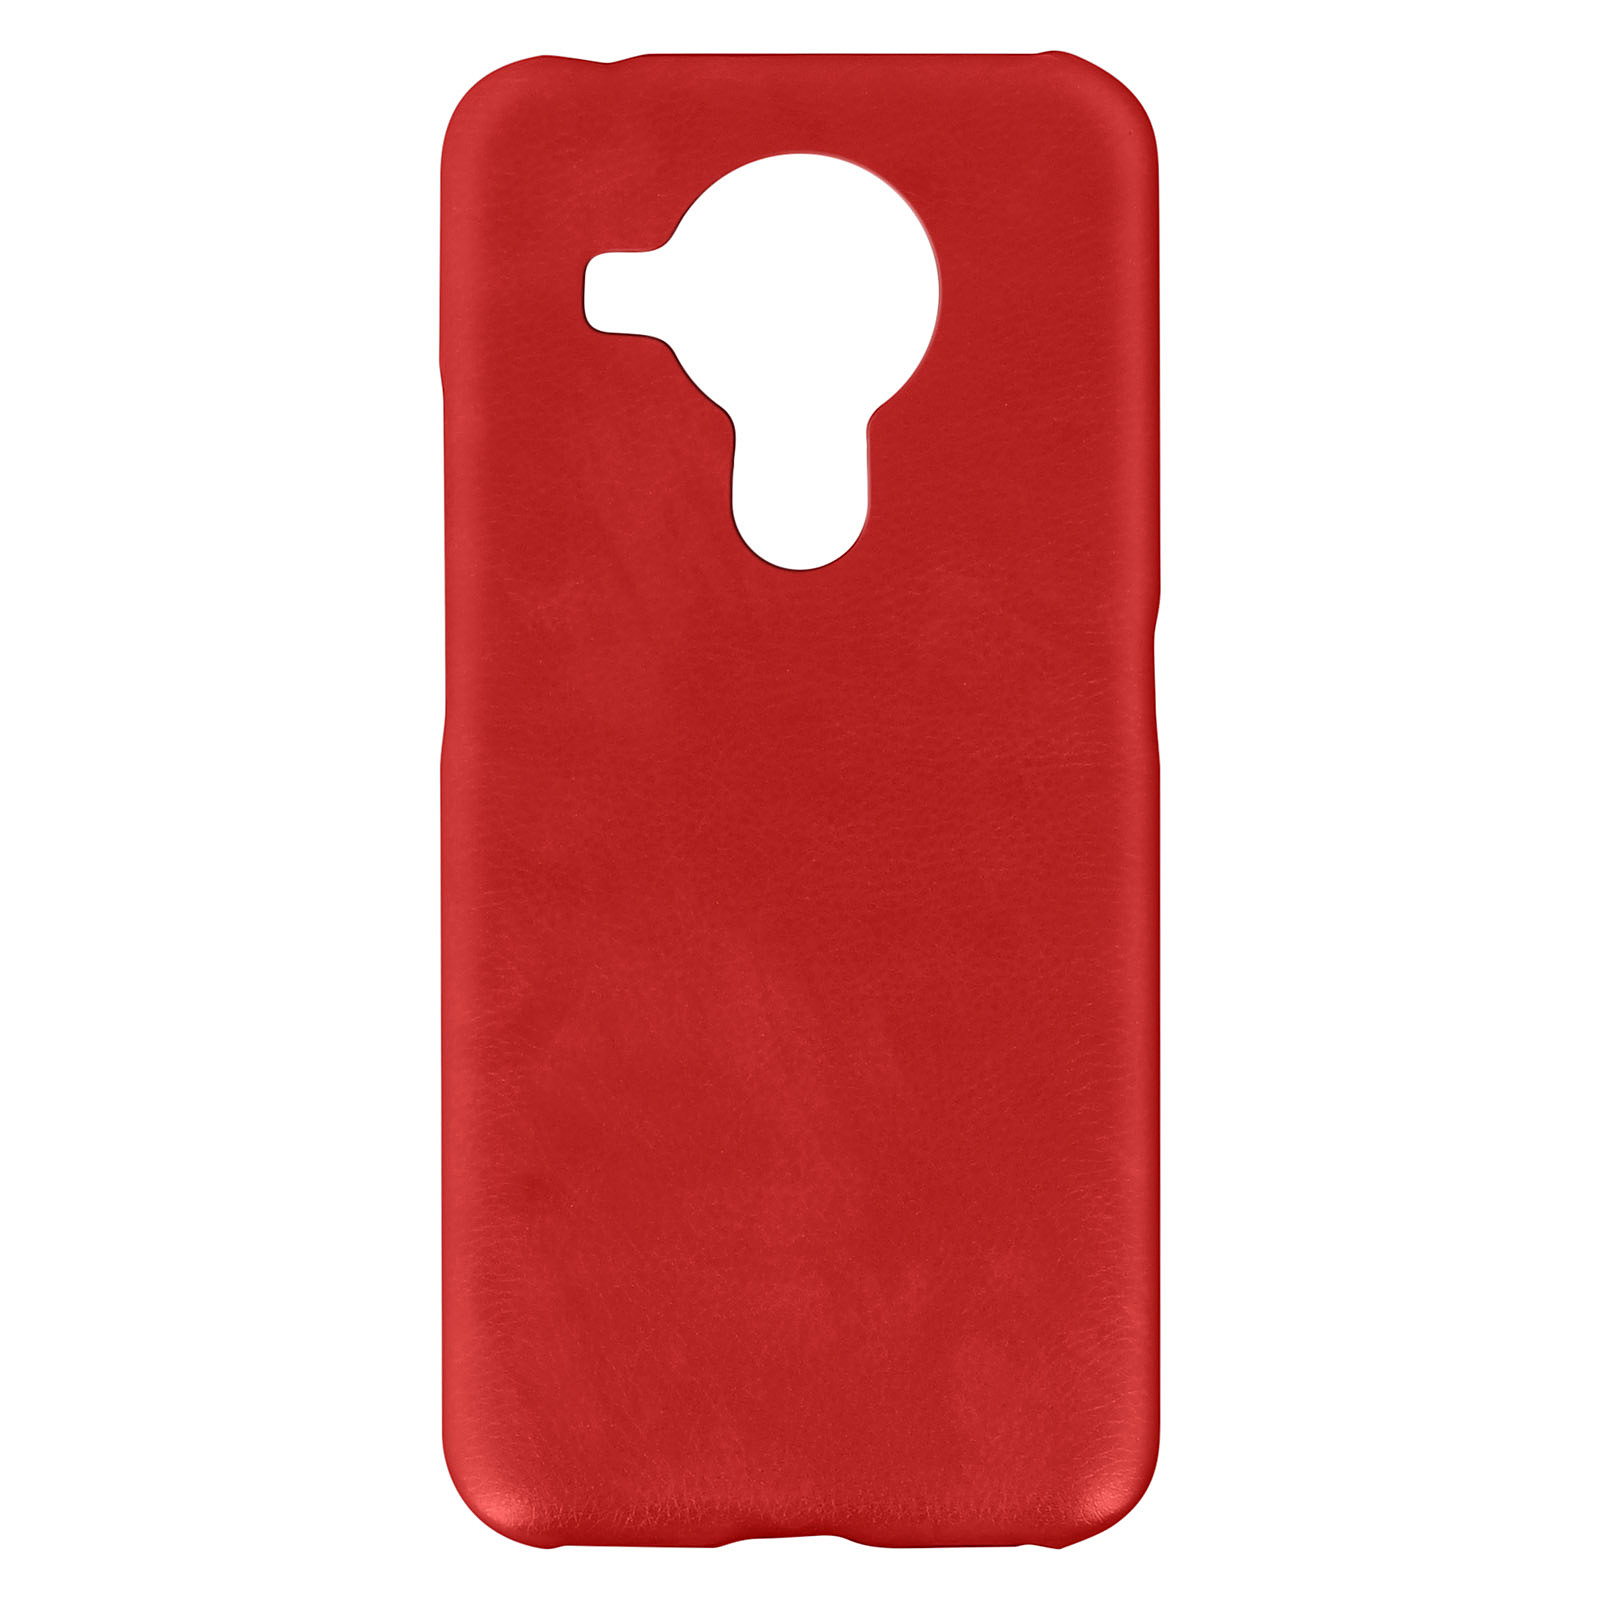 Avizar Coque pour Nokia 5.4 / 3.4 Protection Rigide Legère Aspect Cuir Vintage Rouge - Coque telephone Avizar